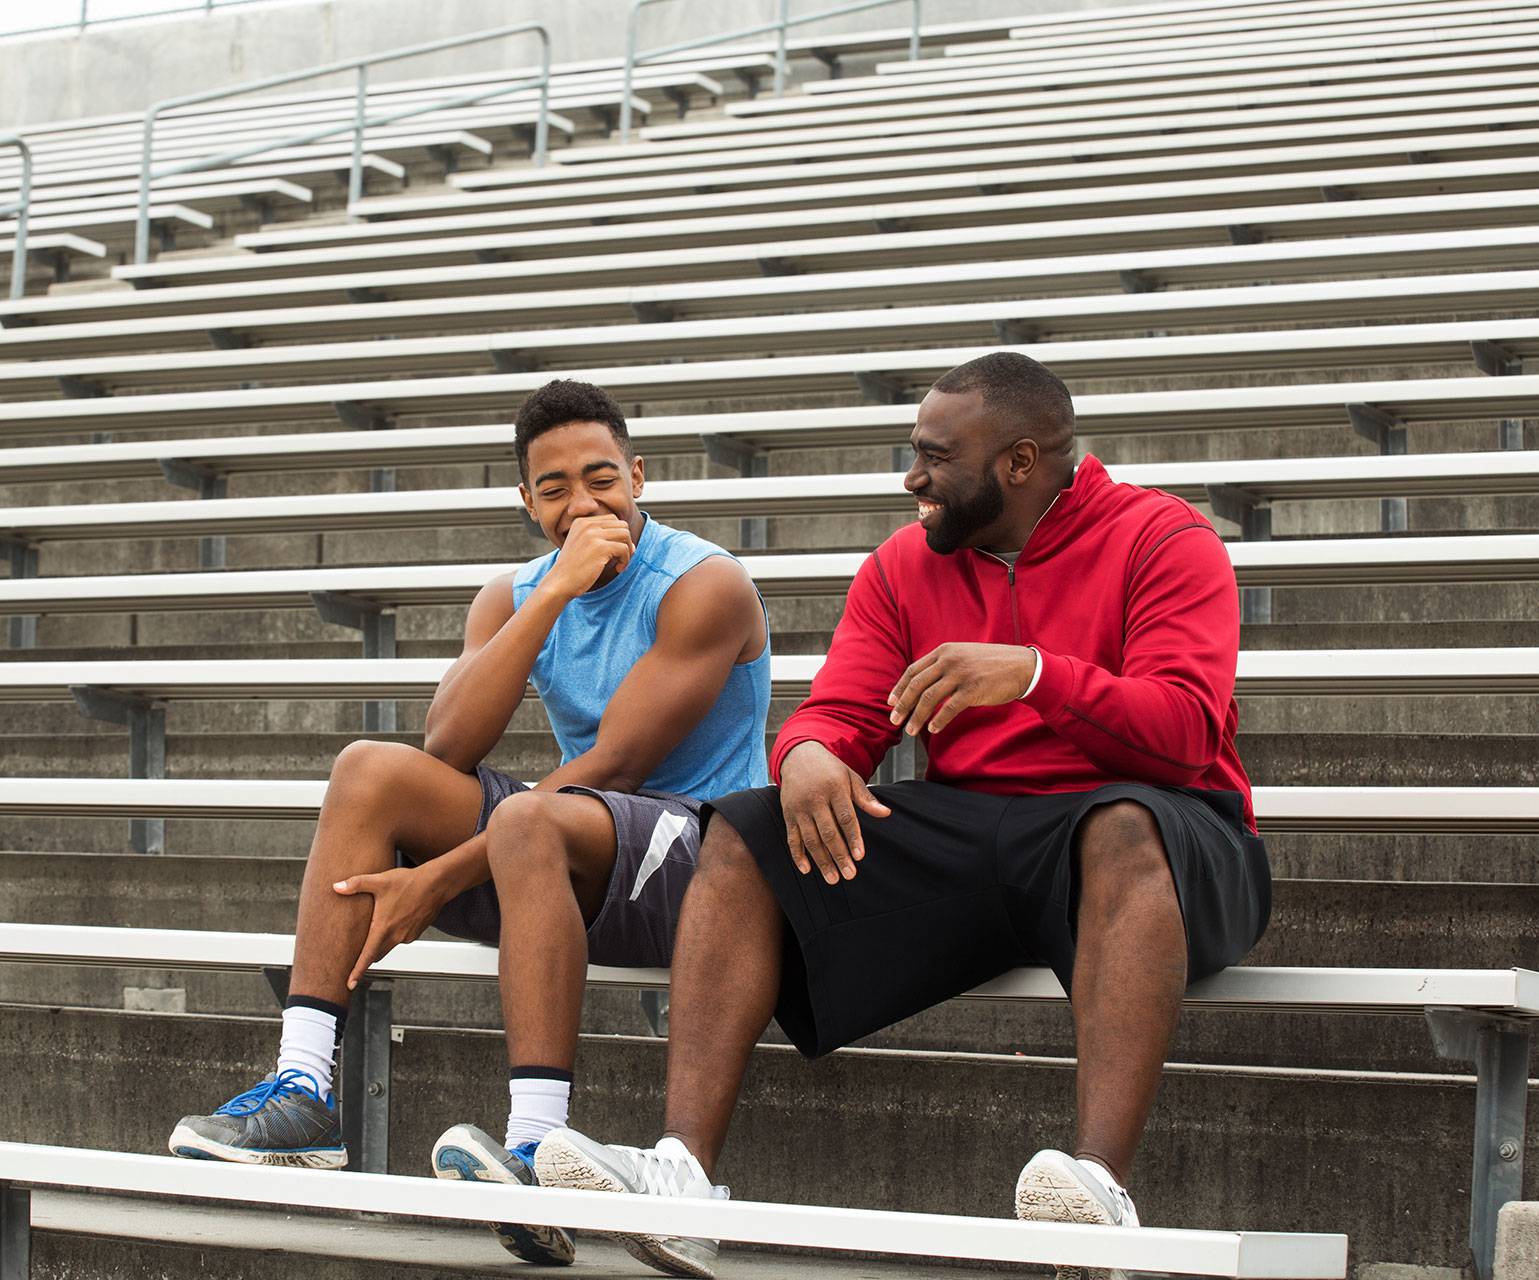 coach sitting with athlete in college stadium